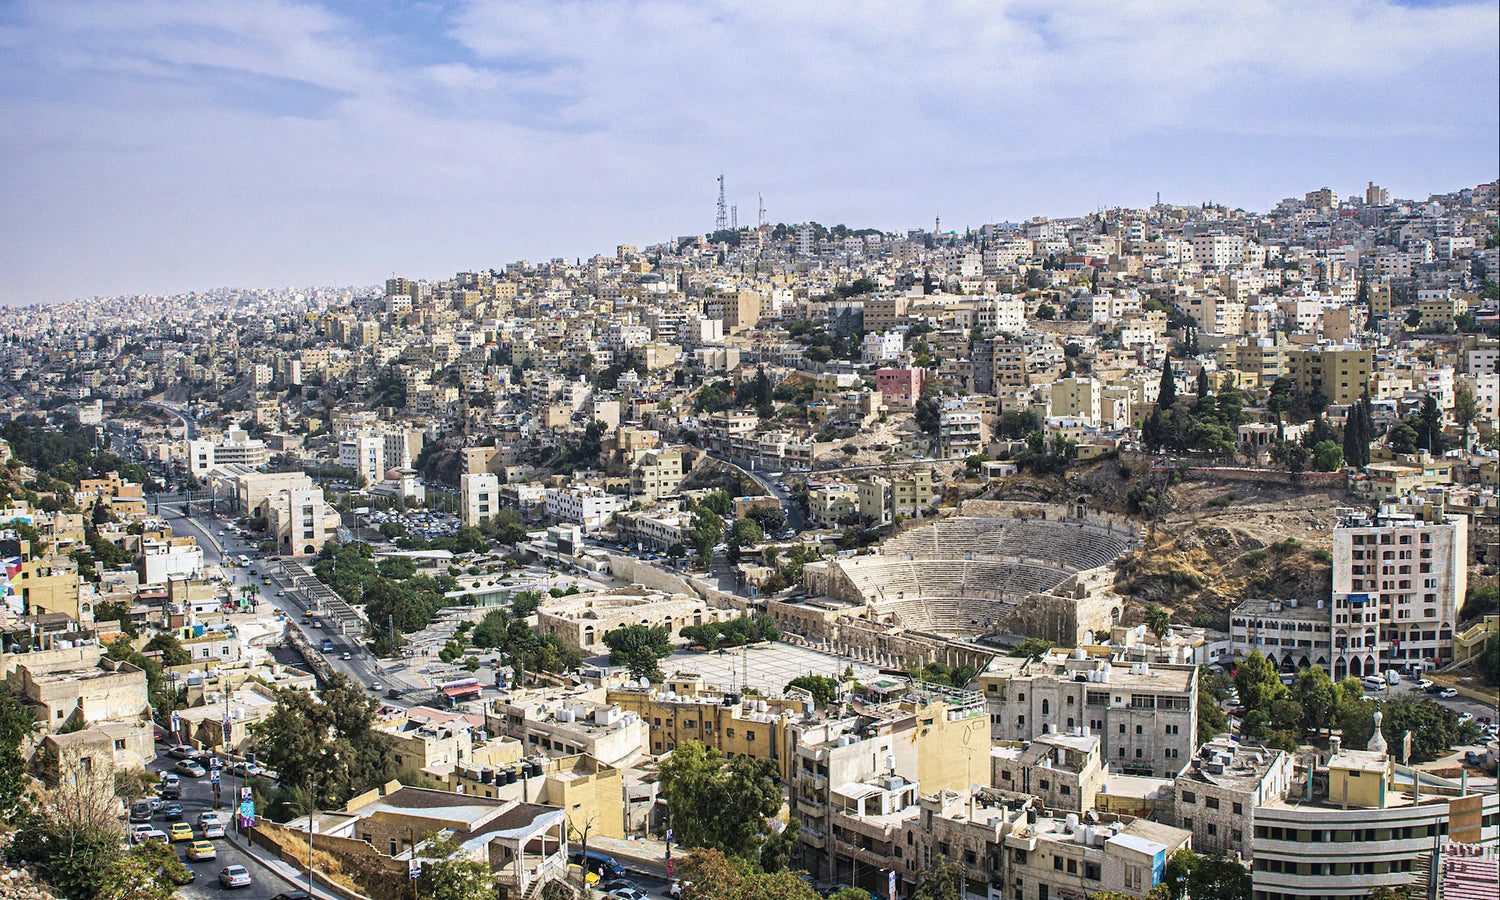 Amman: Where History Meets Modernity